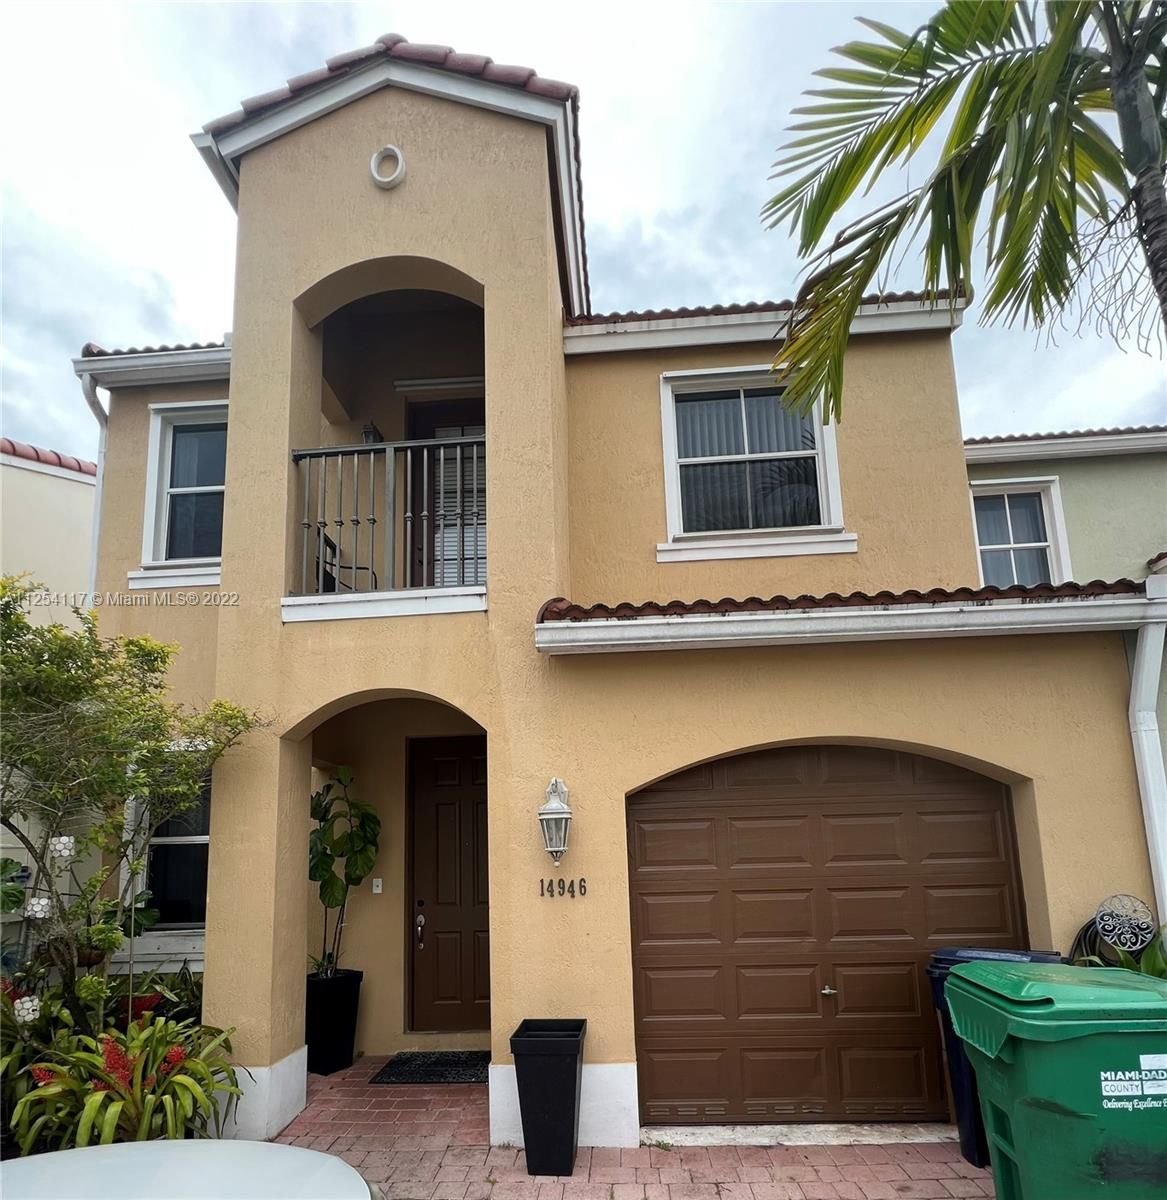 Real estate property located at 14946 41st Ln #14946, Miami-Dade County, Miami, FL